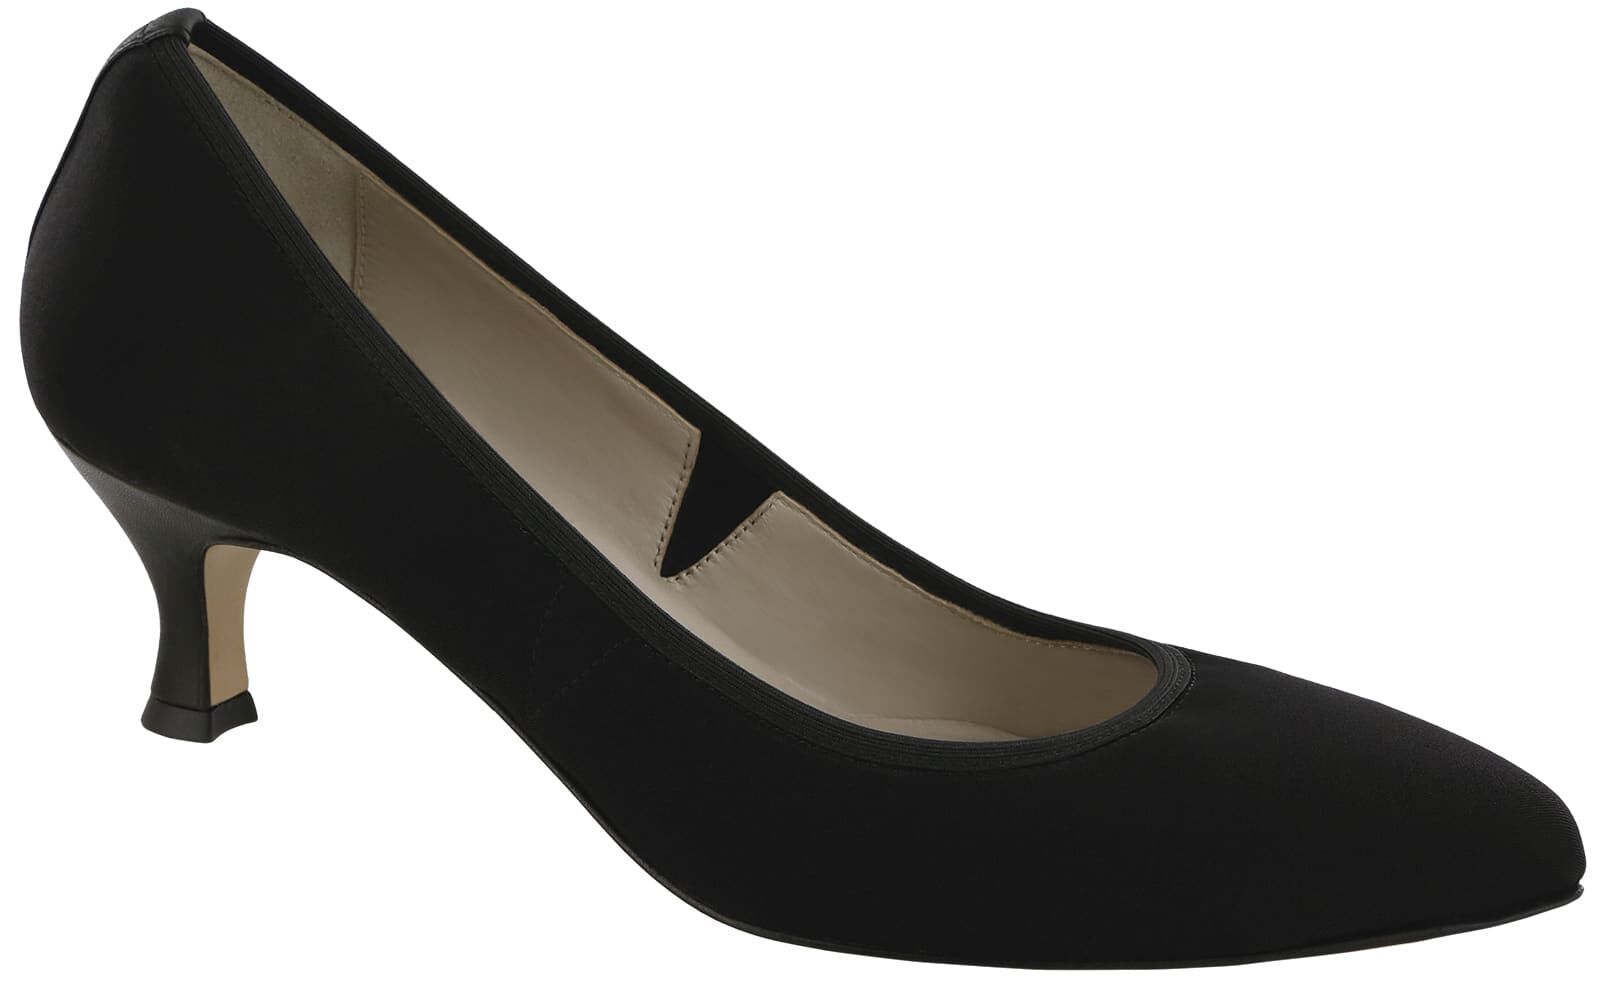 Buy the black Lotus ladies' Rachel court shoes at www.lotusshoes.co.uk